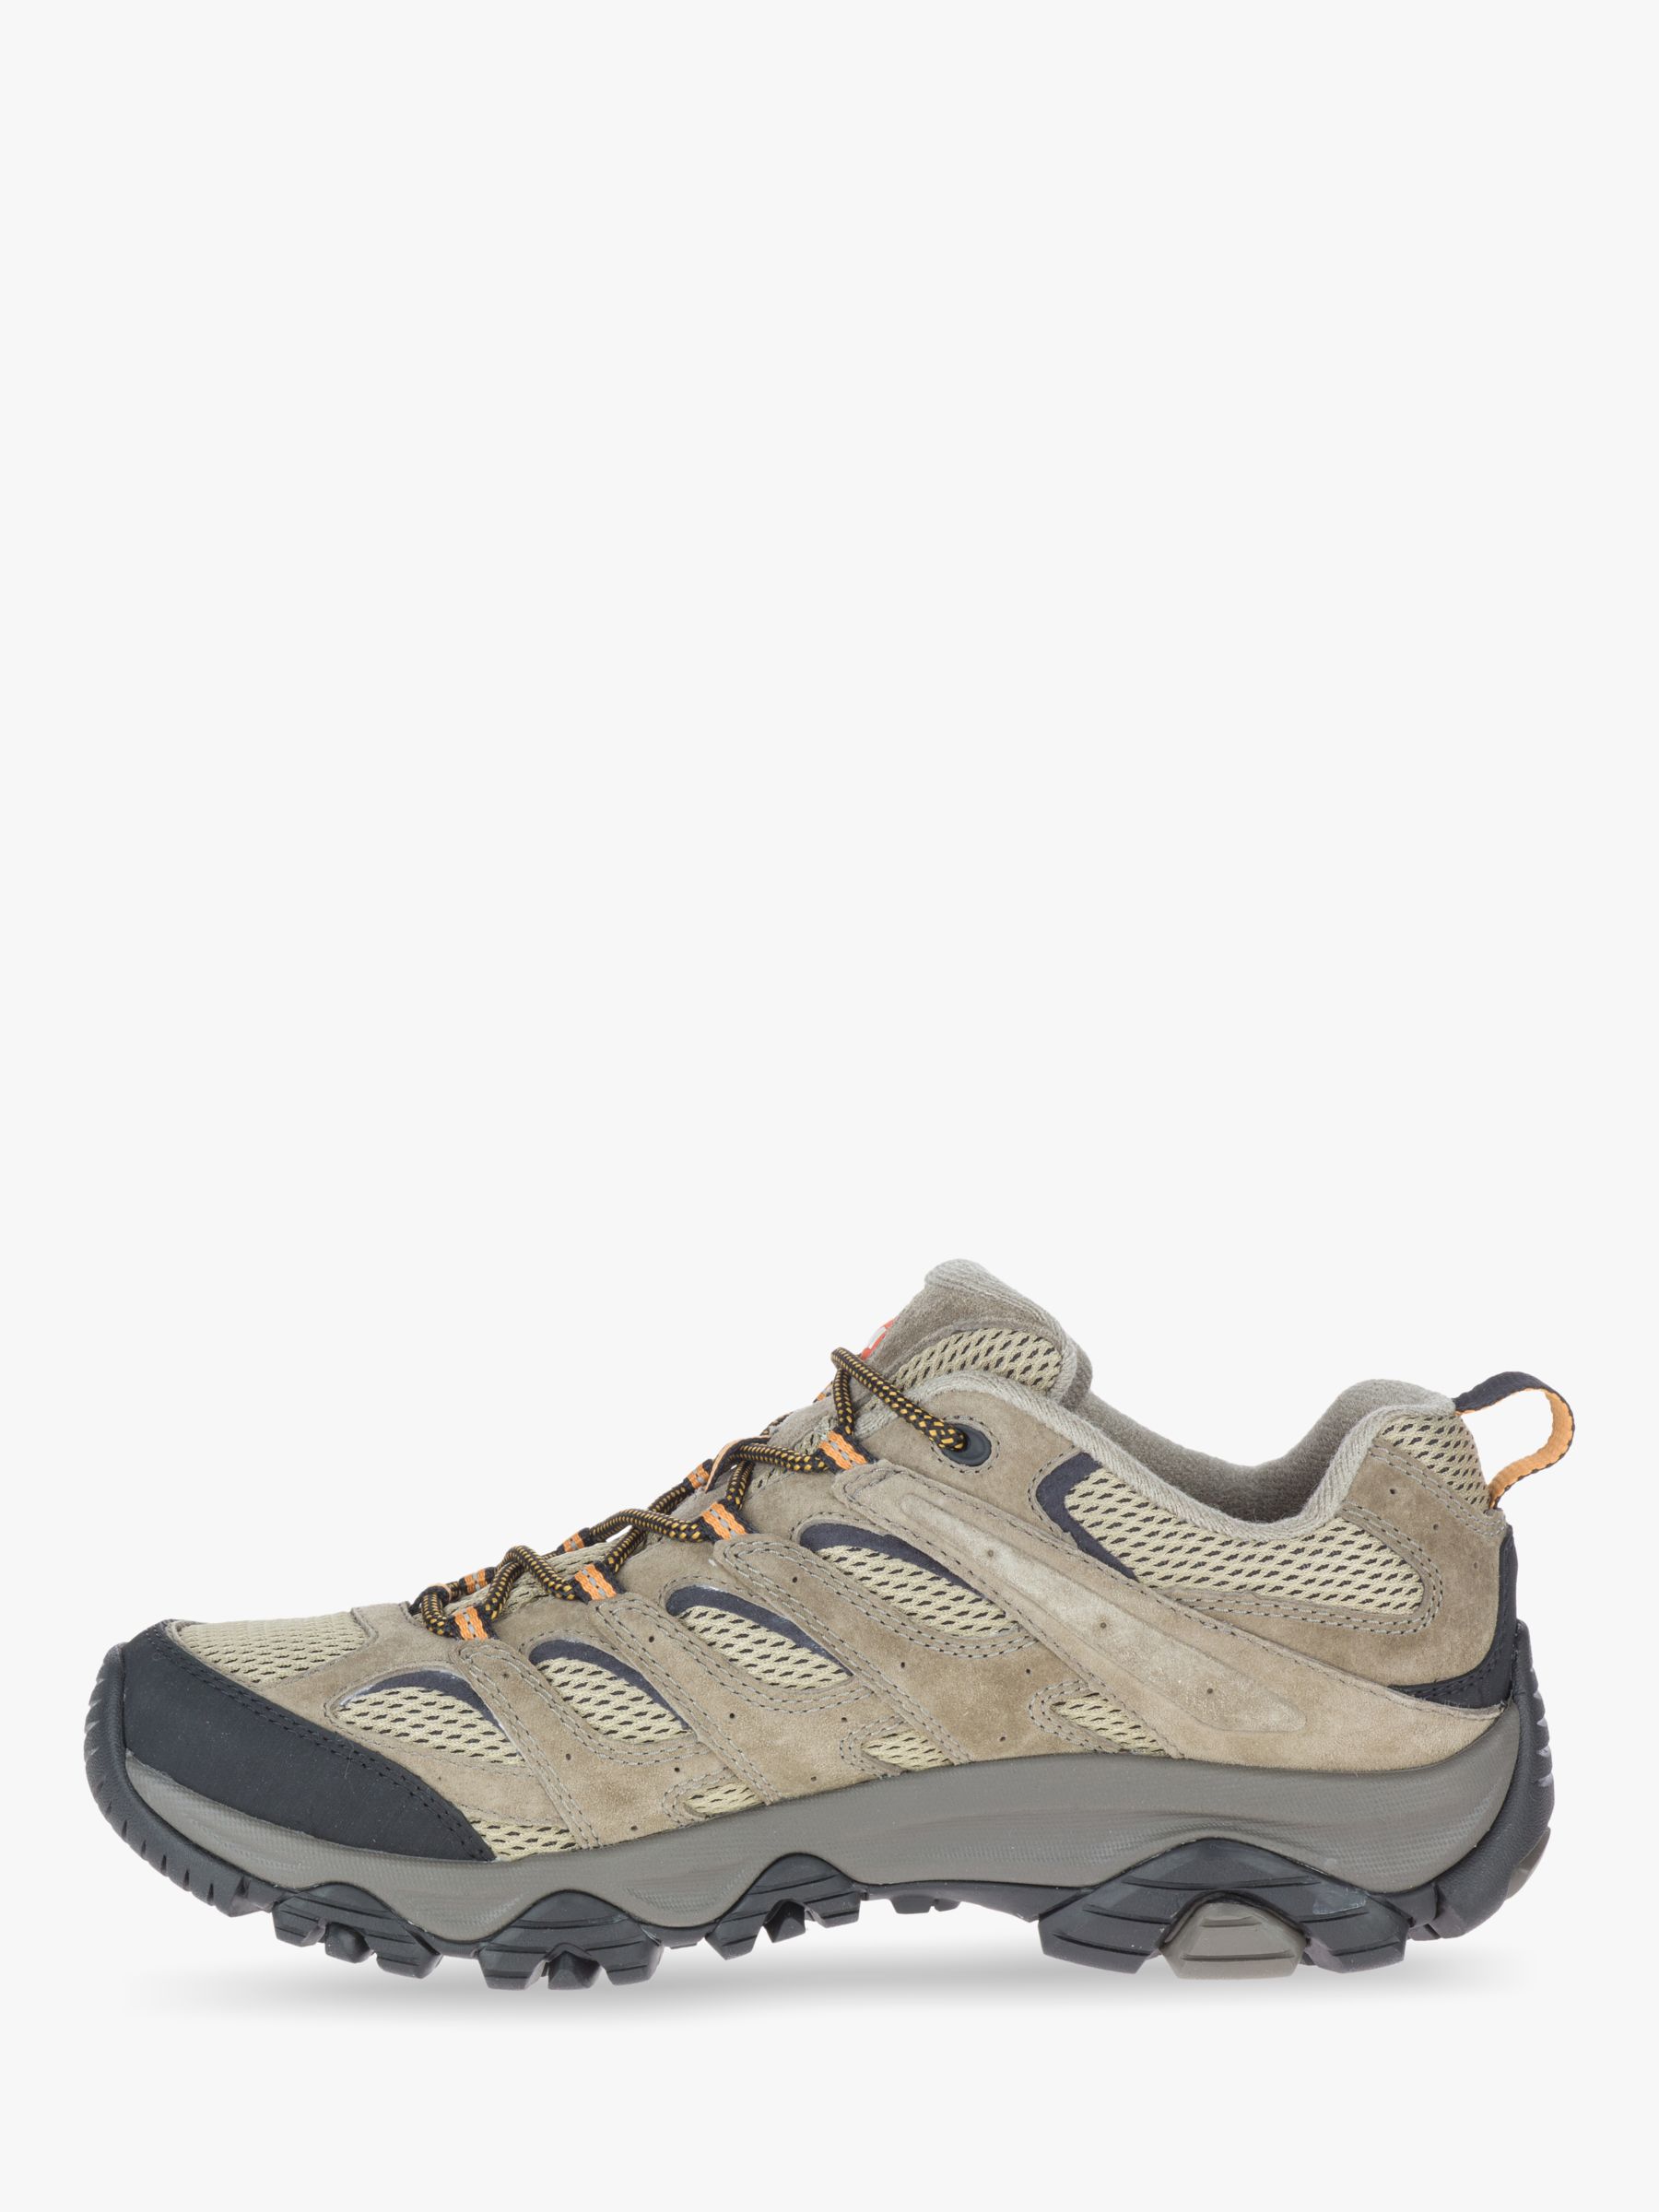 Merrell MOAB 3 Men's Hiking Shoes, Pecan, 7